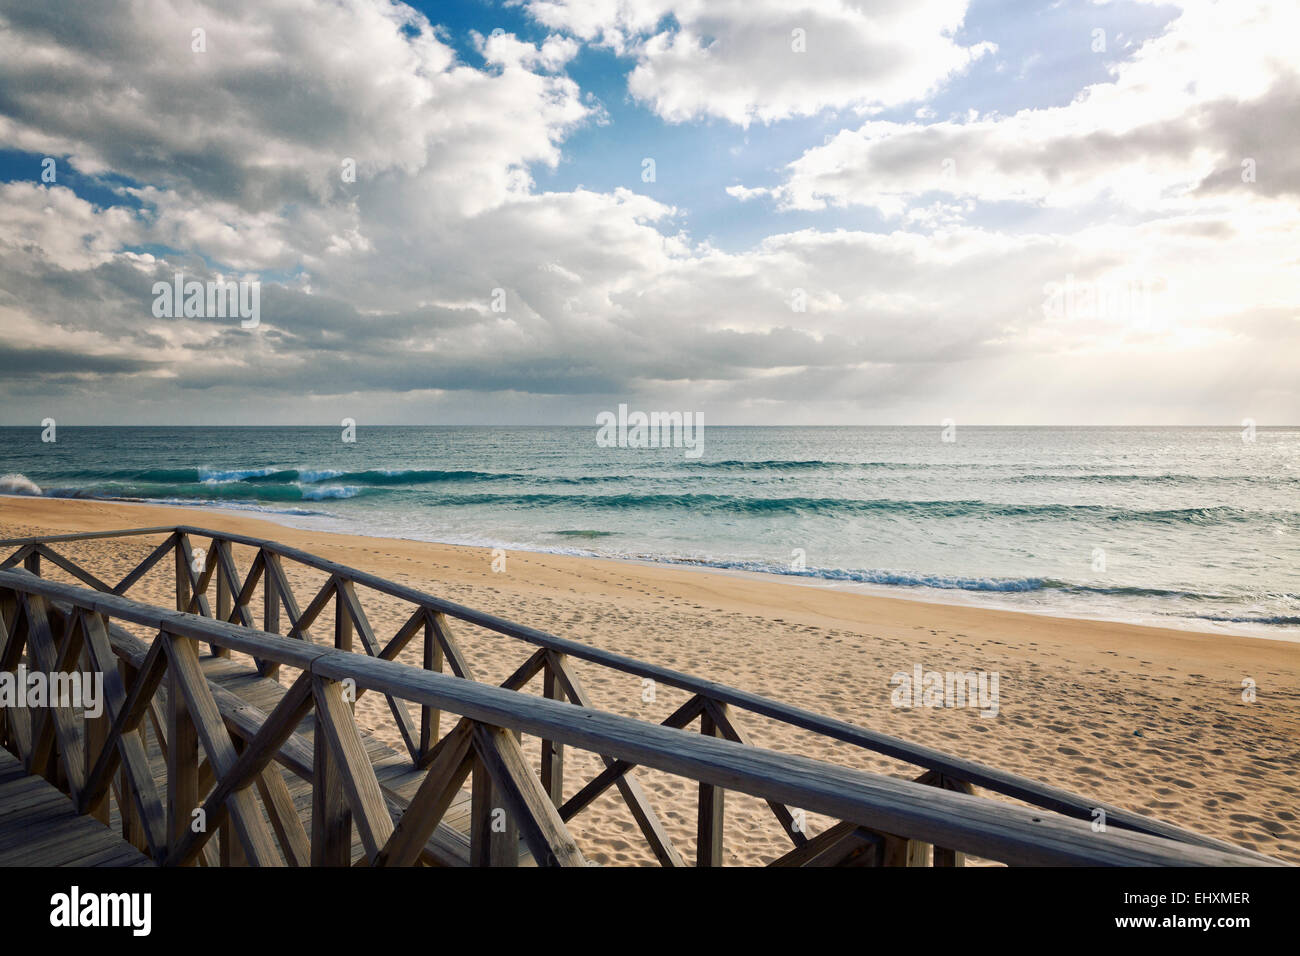 Portugal, Algarve, Ria Formosa, boardwalk to the beach Stock Photo